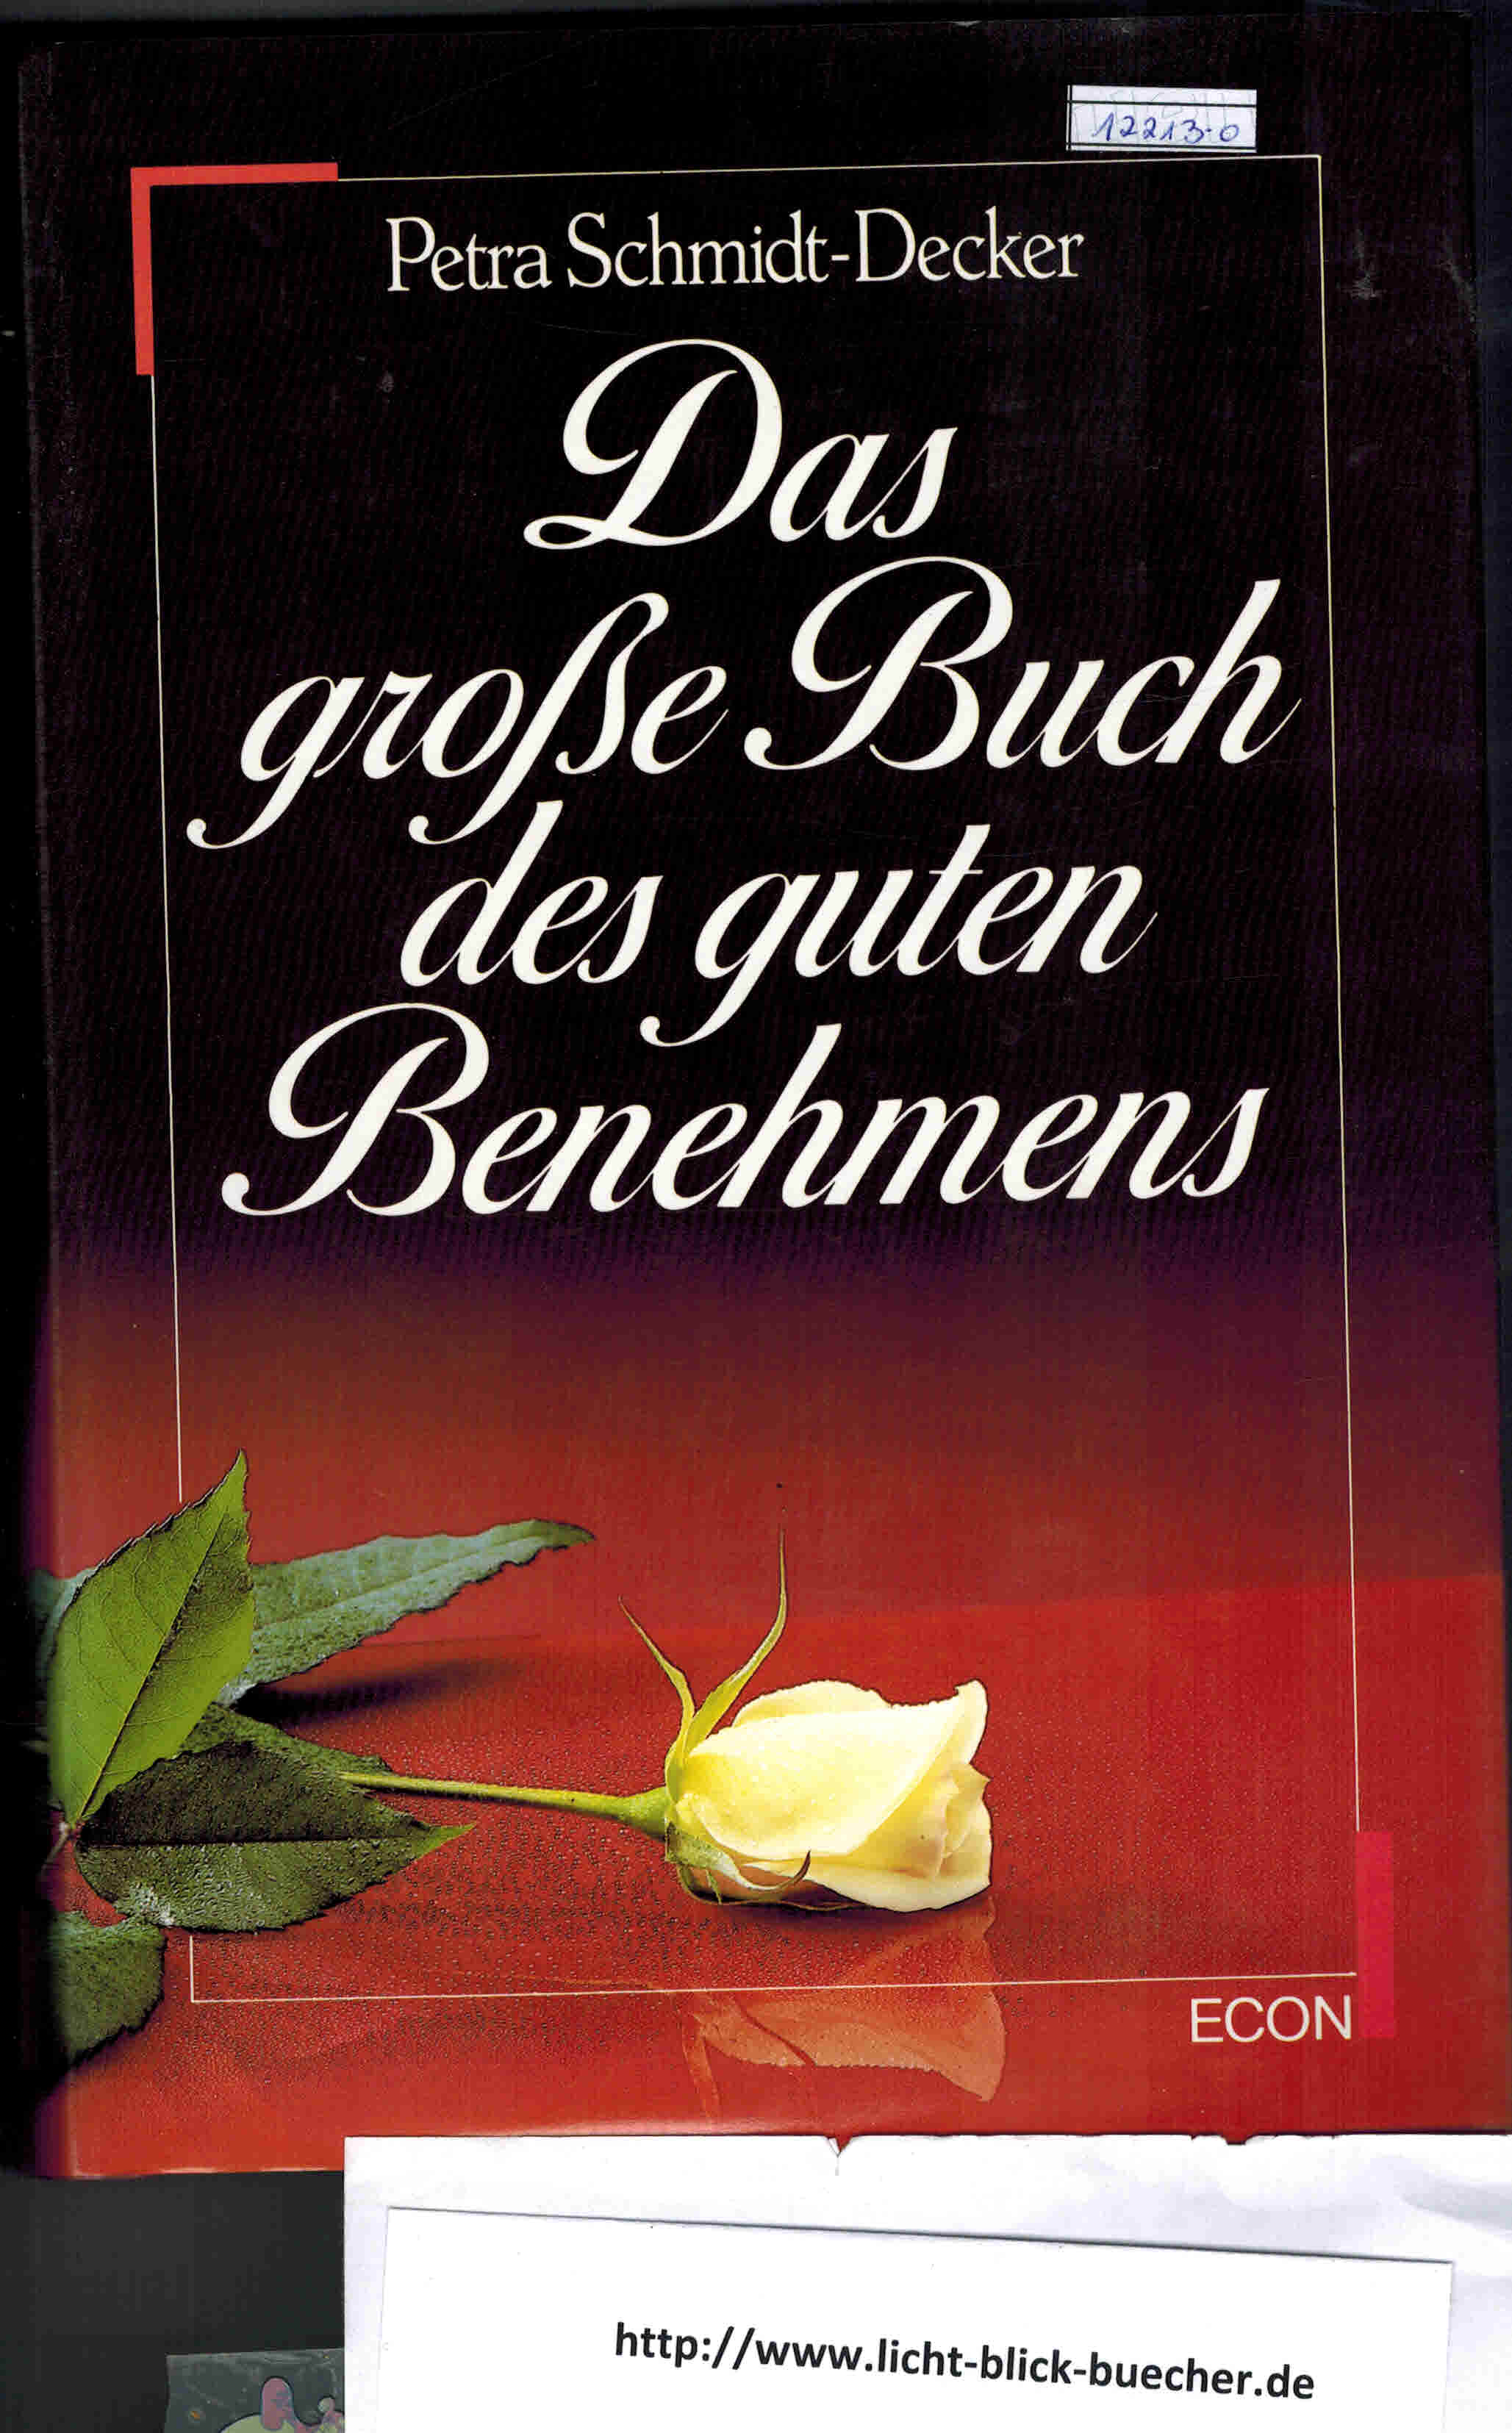 Das grosse Buch des guten BenehmensPetra Schmidt-Decker